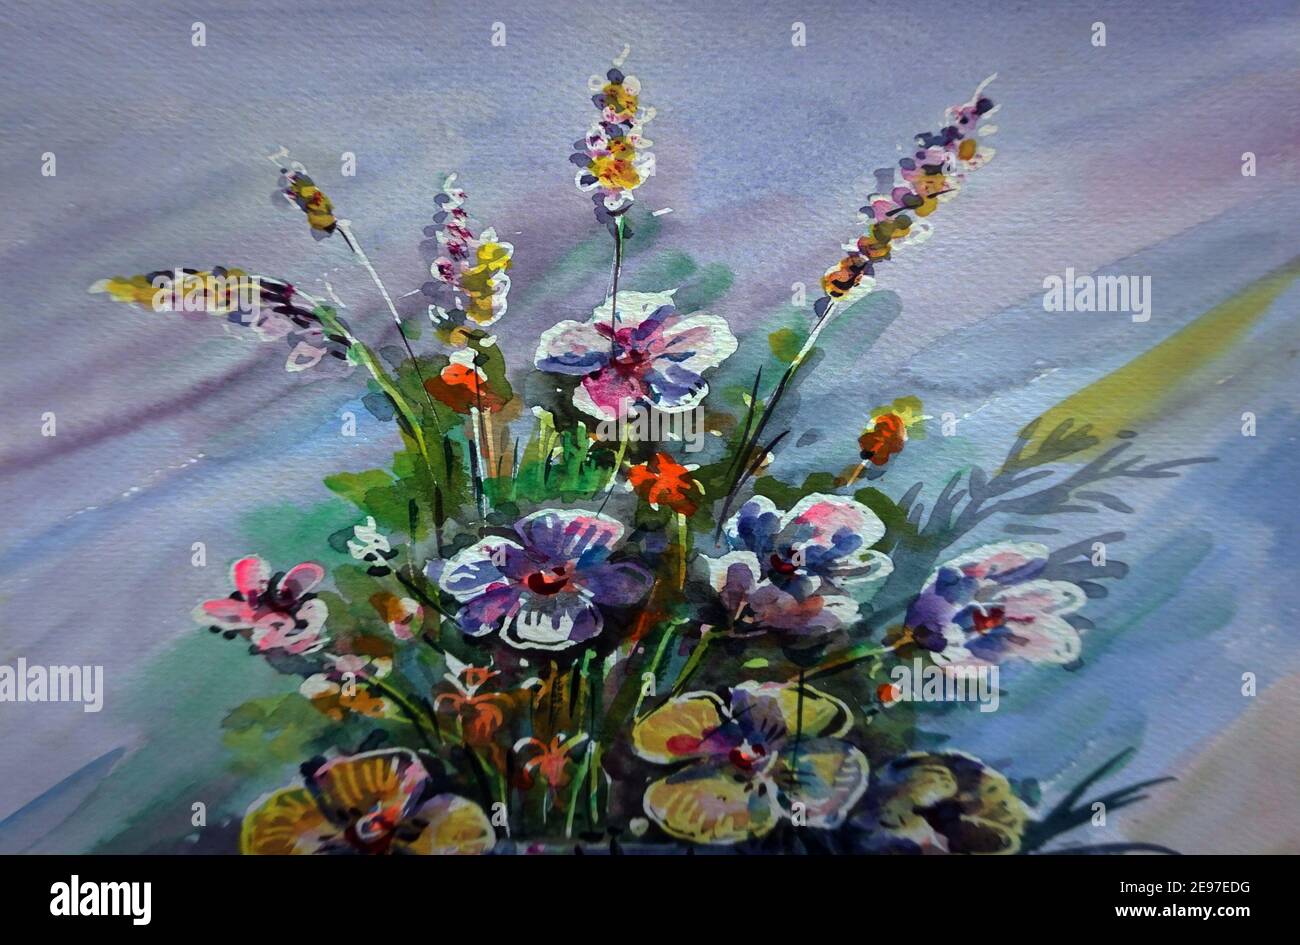 Pinturas de acuarela de flores fotografías e imágenes de alta resolución -  Alamy